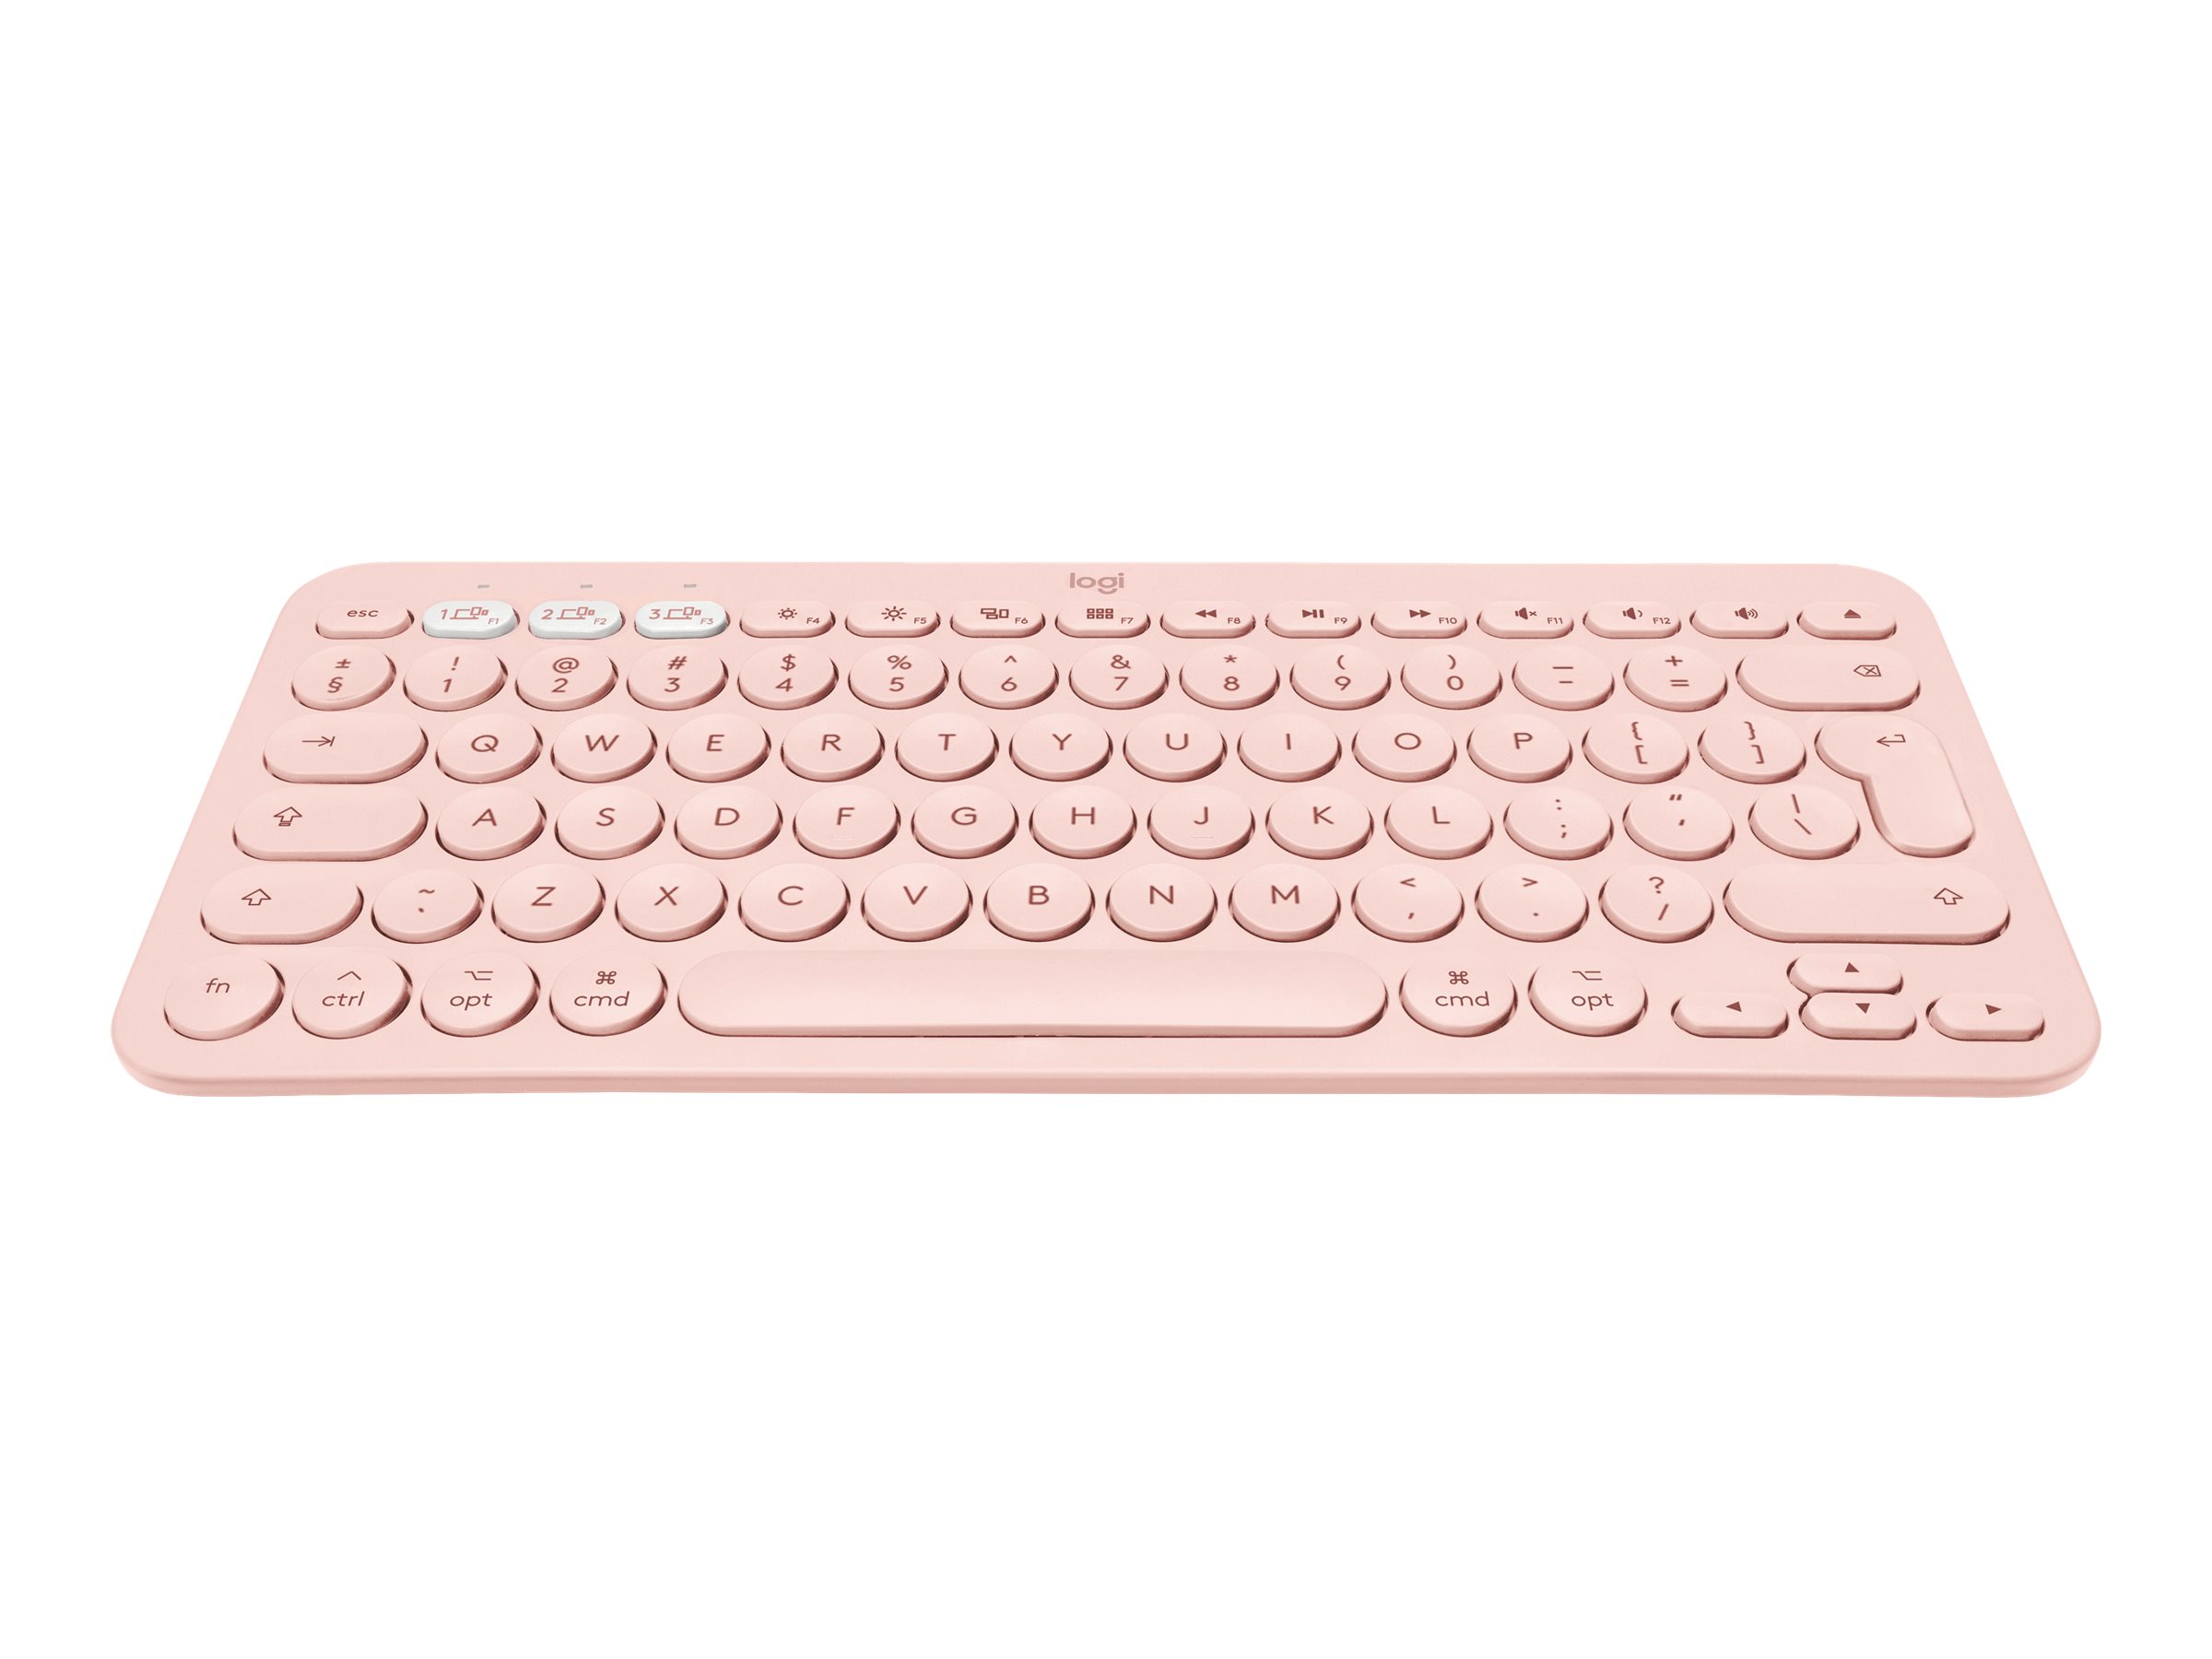 Logitech K380 Multi-Device Bluetooth Keyboard - Tastatur - kabellos - Bluetooth 3.0 - QWERTZ - Schweiz